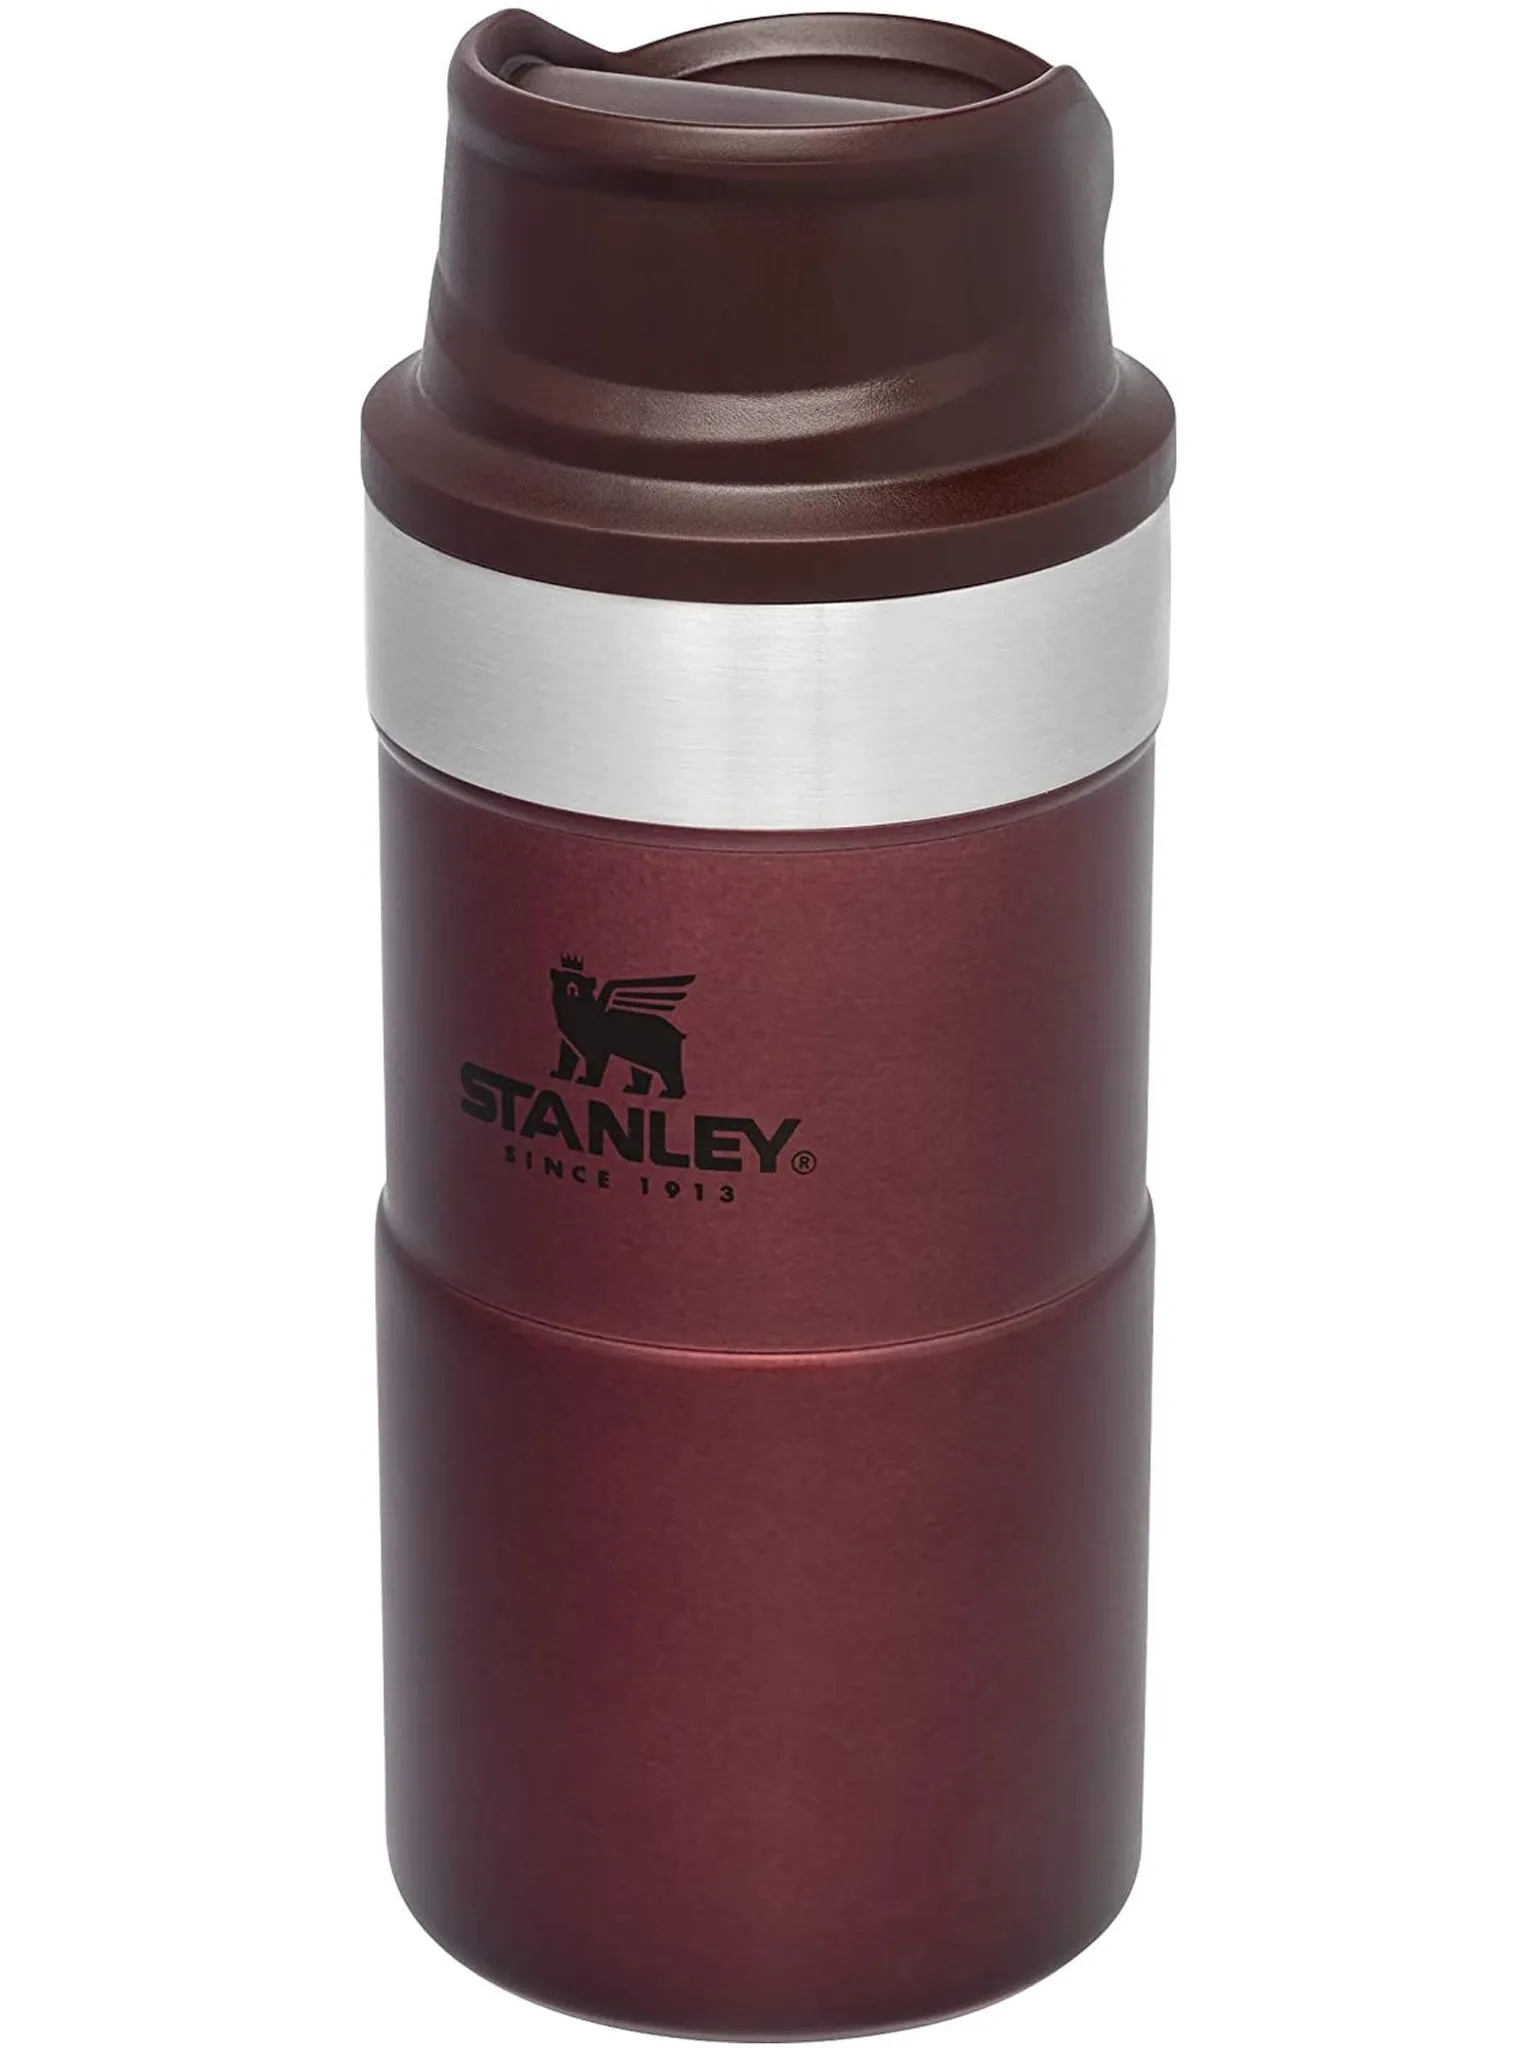 Stanley classic trigger-action travel mug nightfall 0,47 liters